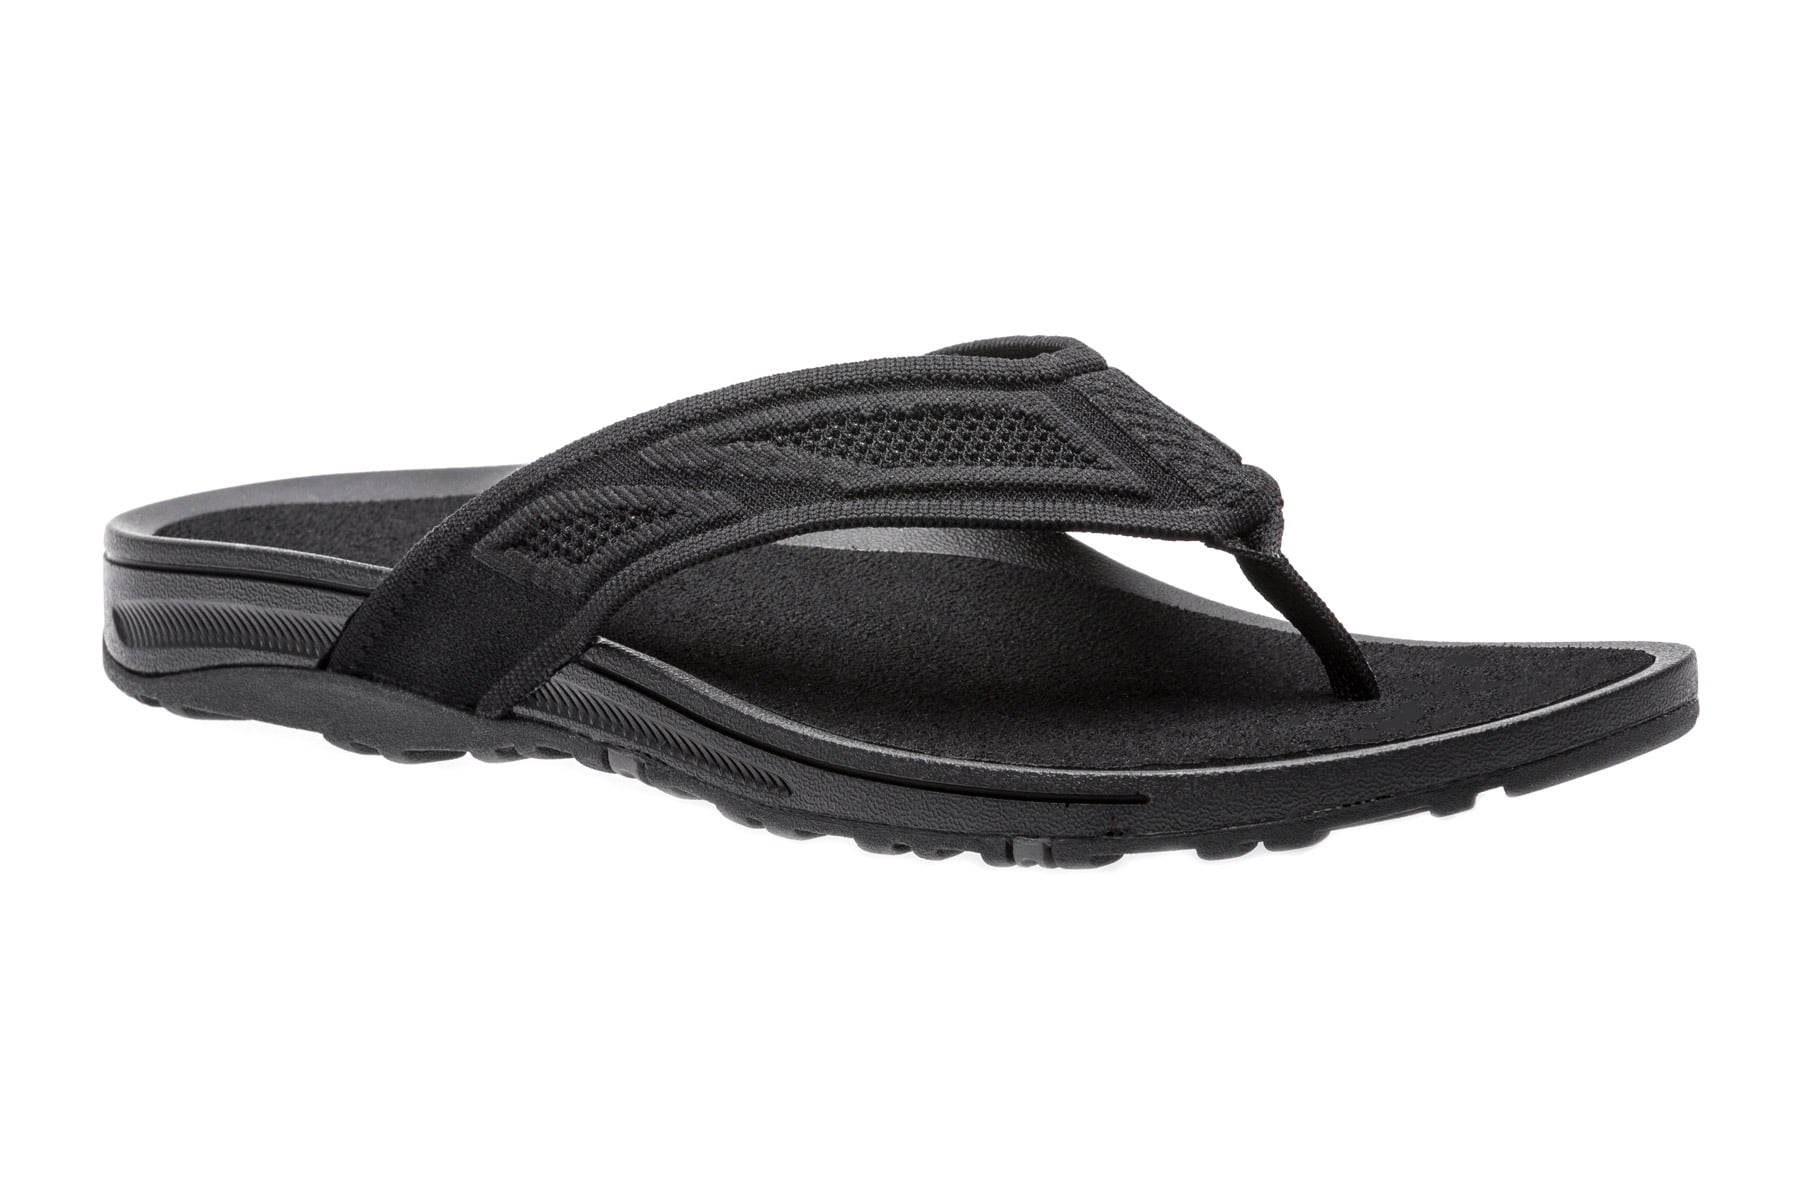 ABEO Affinity Post - Flip Flop Sandals in Black - Walmart.com